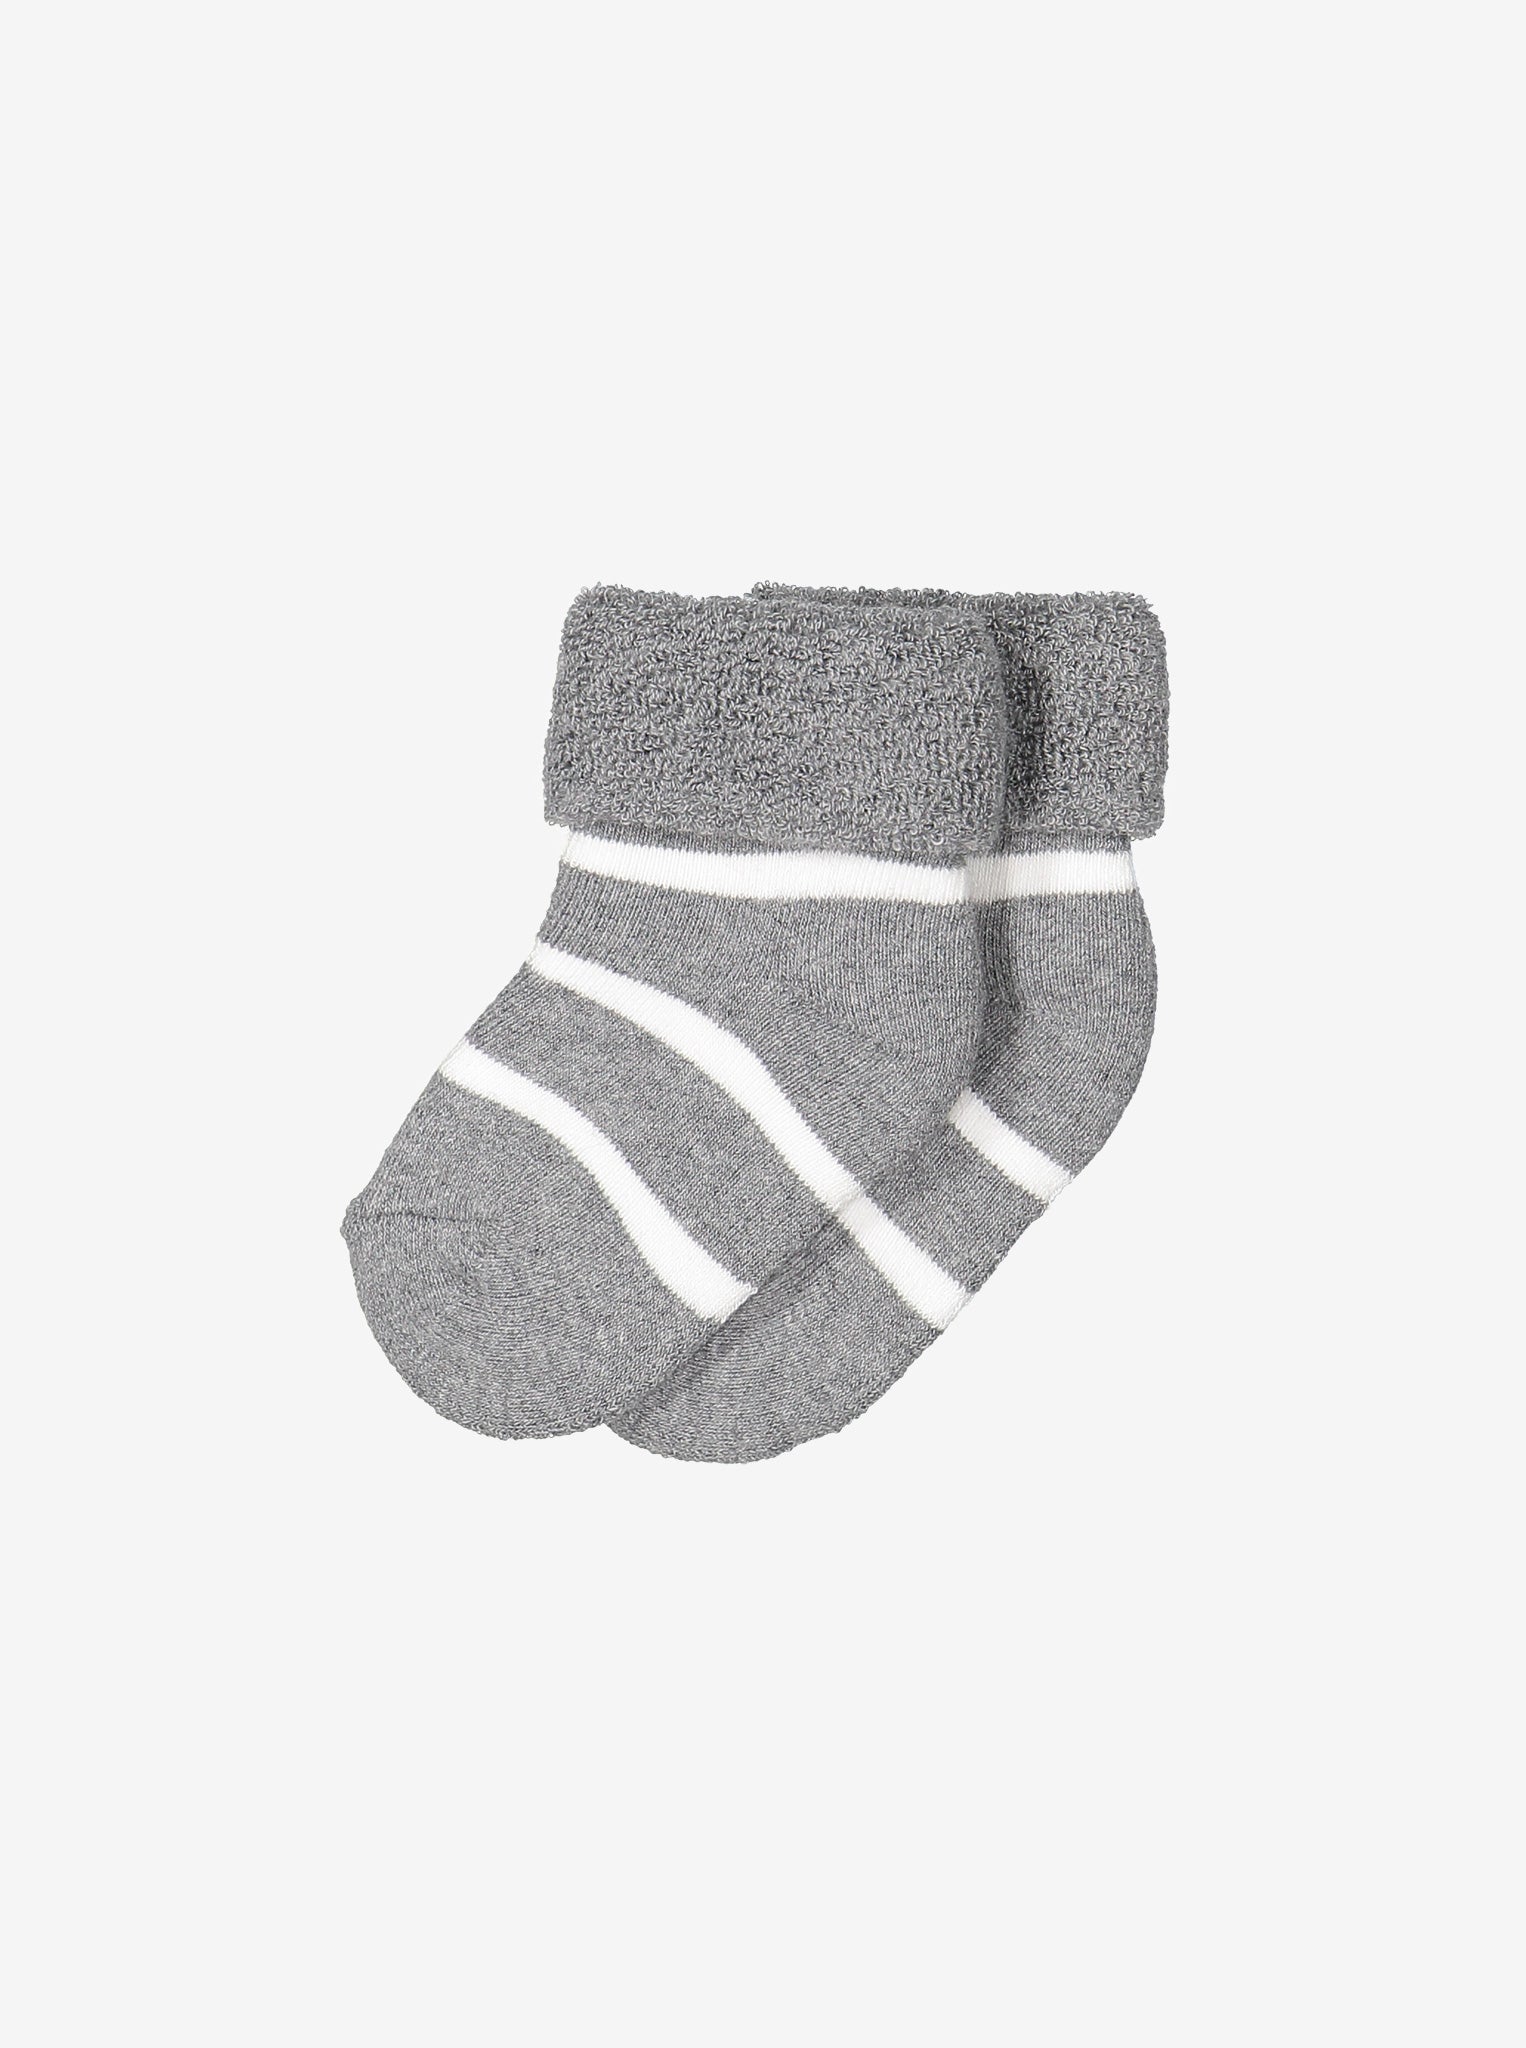 newborn baby Socks grey and white stripe antislip, organic cotton comfortable polarn o. pyret